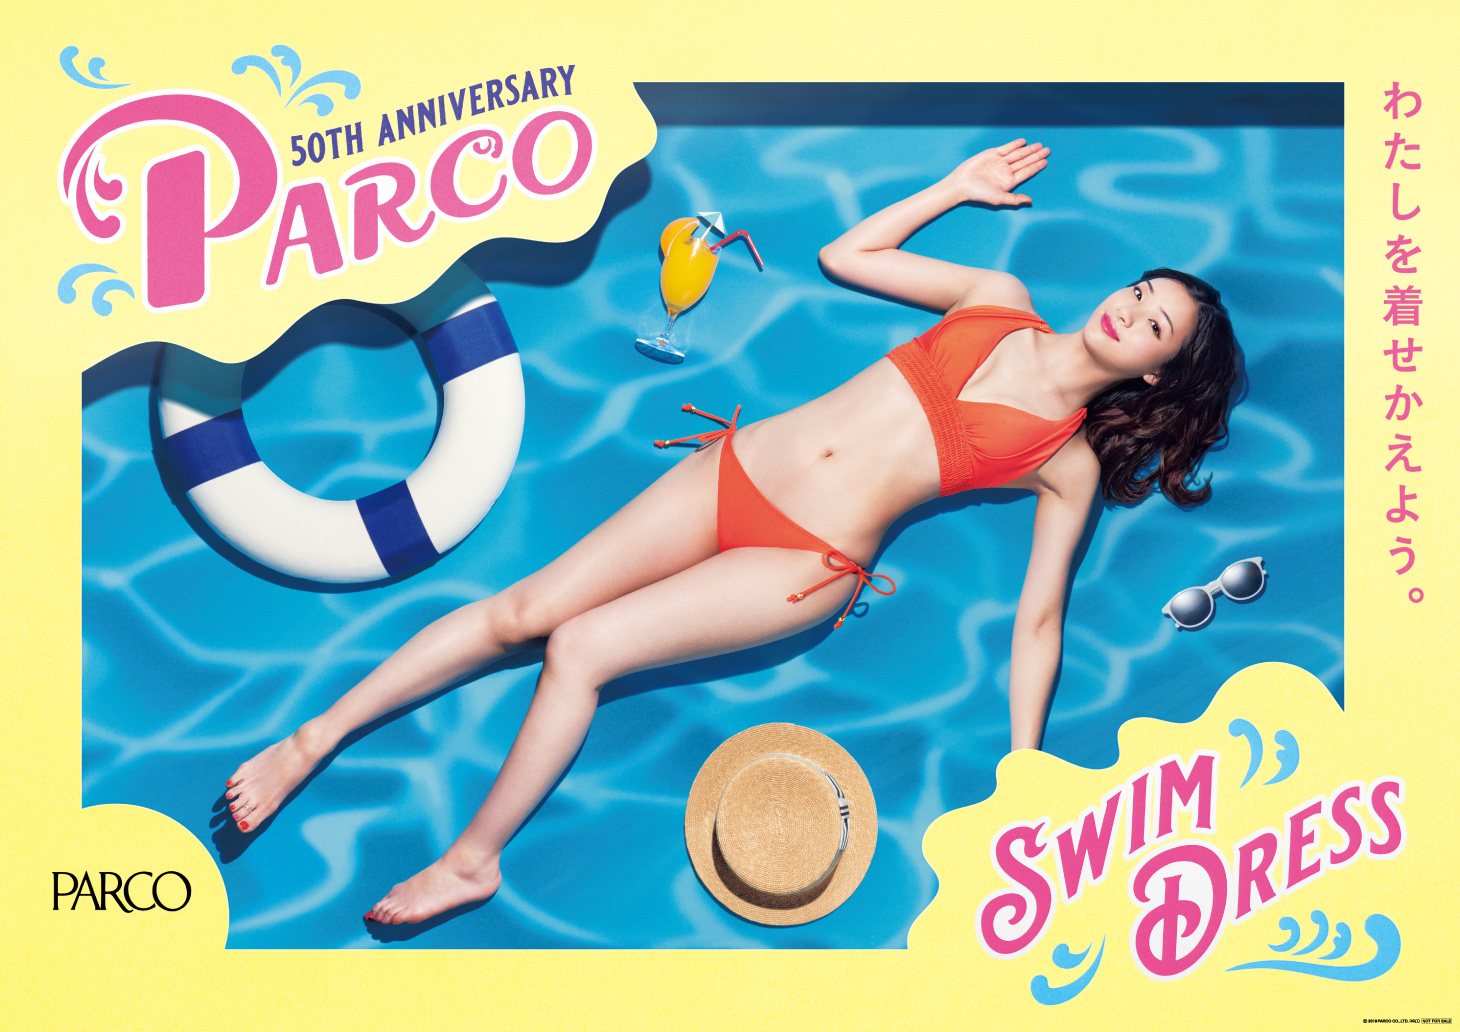 Parco Swim Dress 19 メイキングムービー公開 足立梨花さん 4年ぶりに水着撮影に挑戦 株式会社パルコのプレスリリース